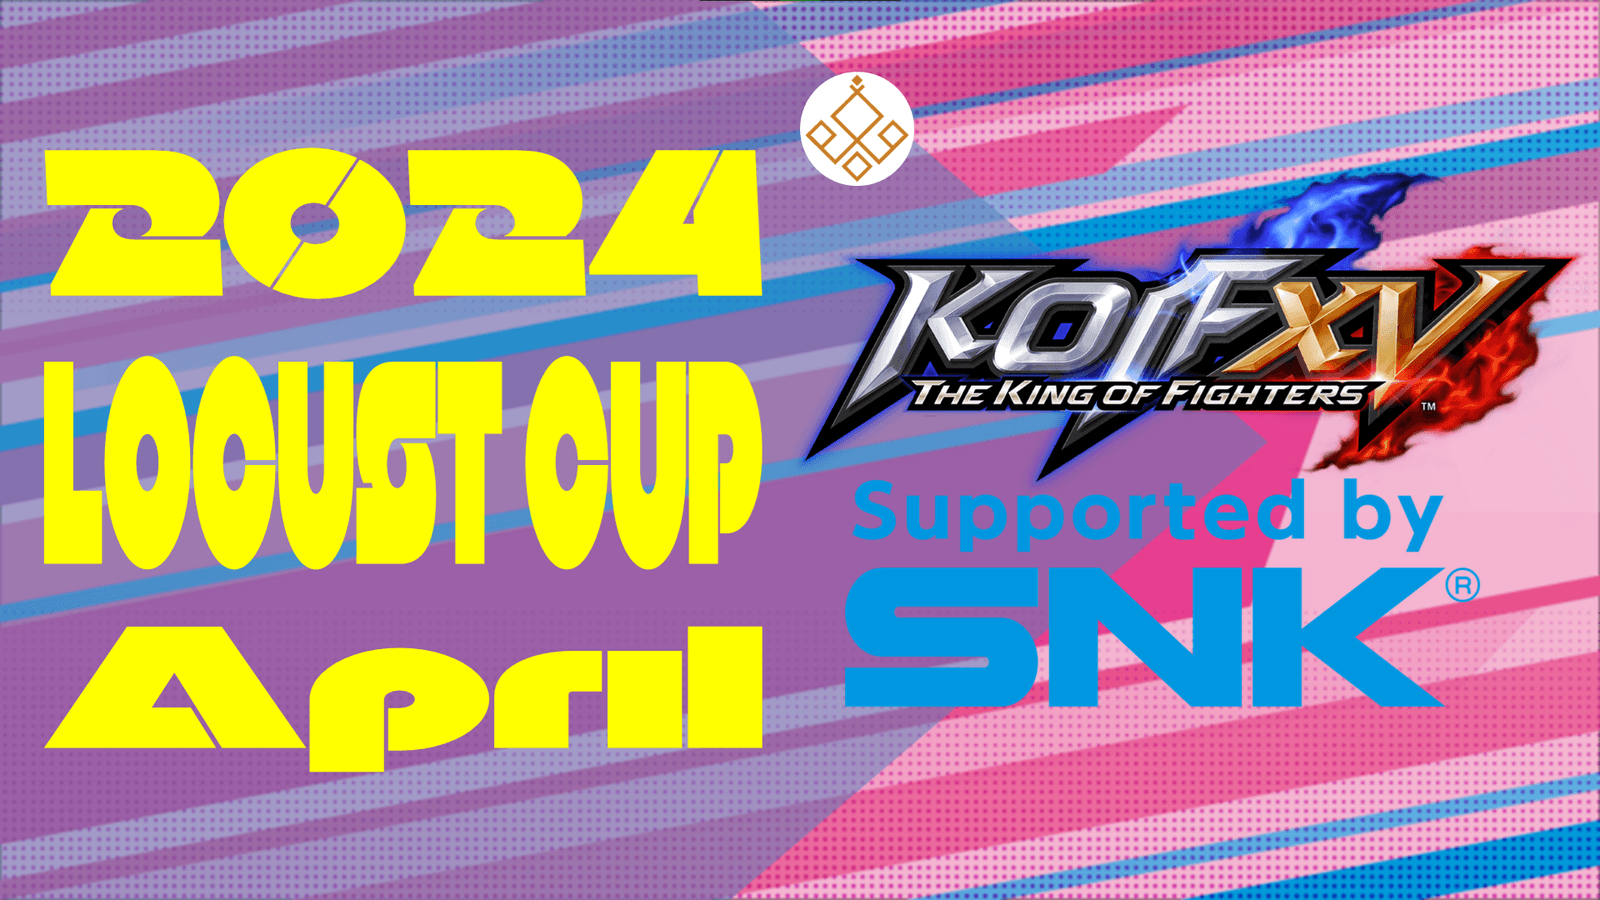 Locust杯 -KOF15 4月期-【2024】 feature image